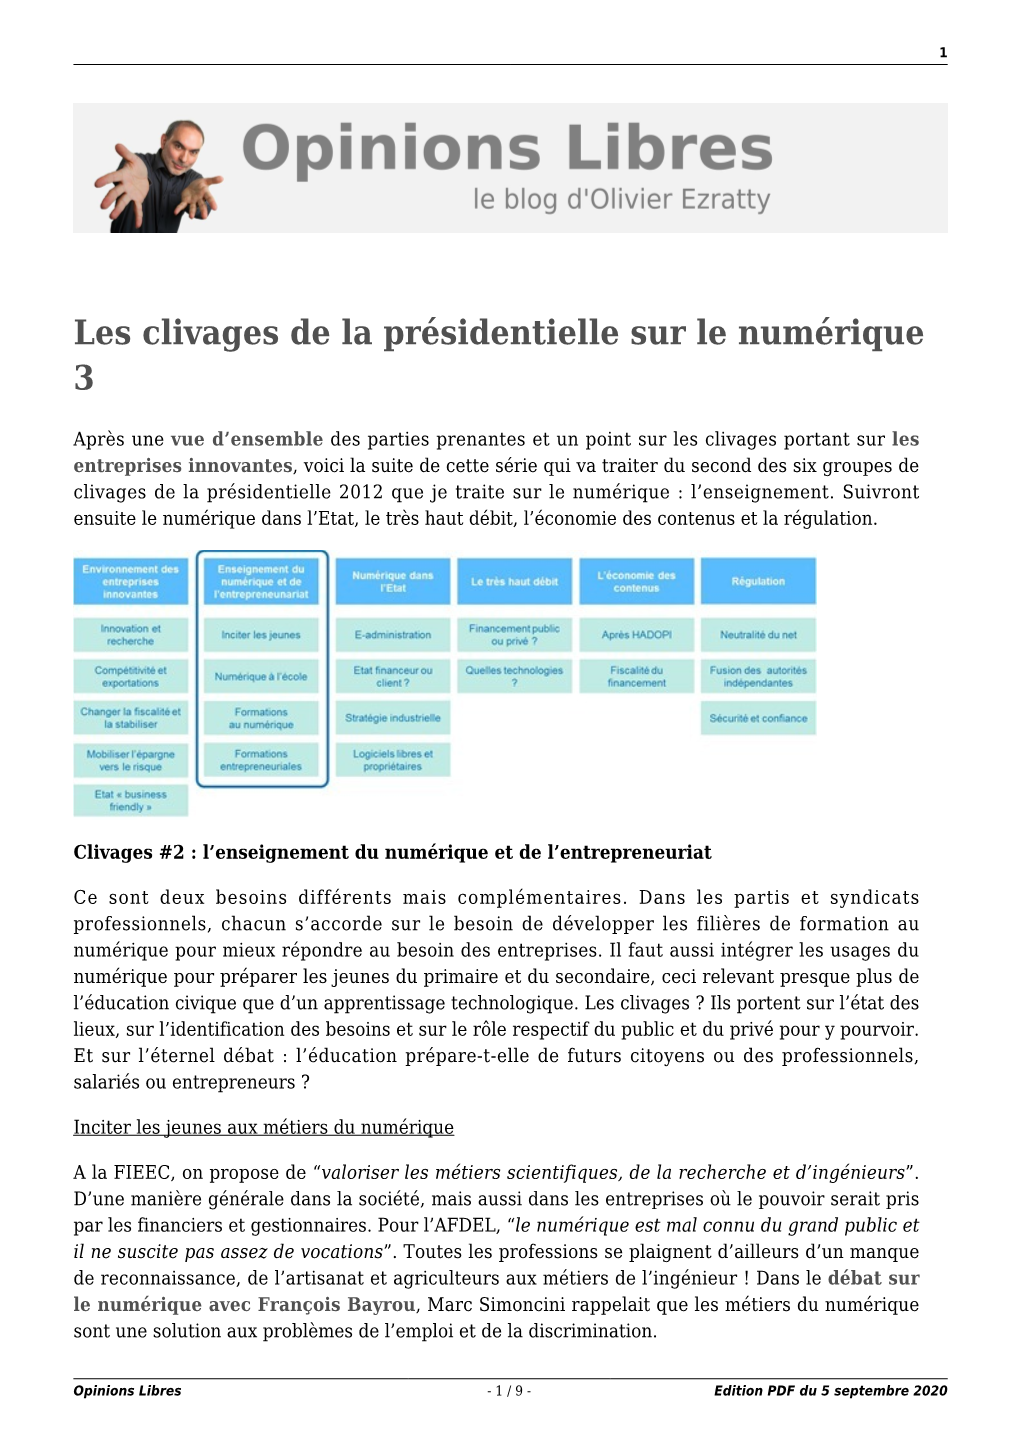 Opinions Libres - 1 / 9 - Edition PDF Du 5 Septembre 2020 2